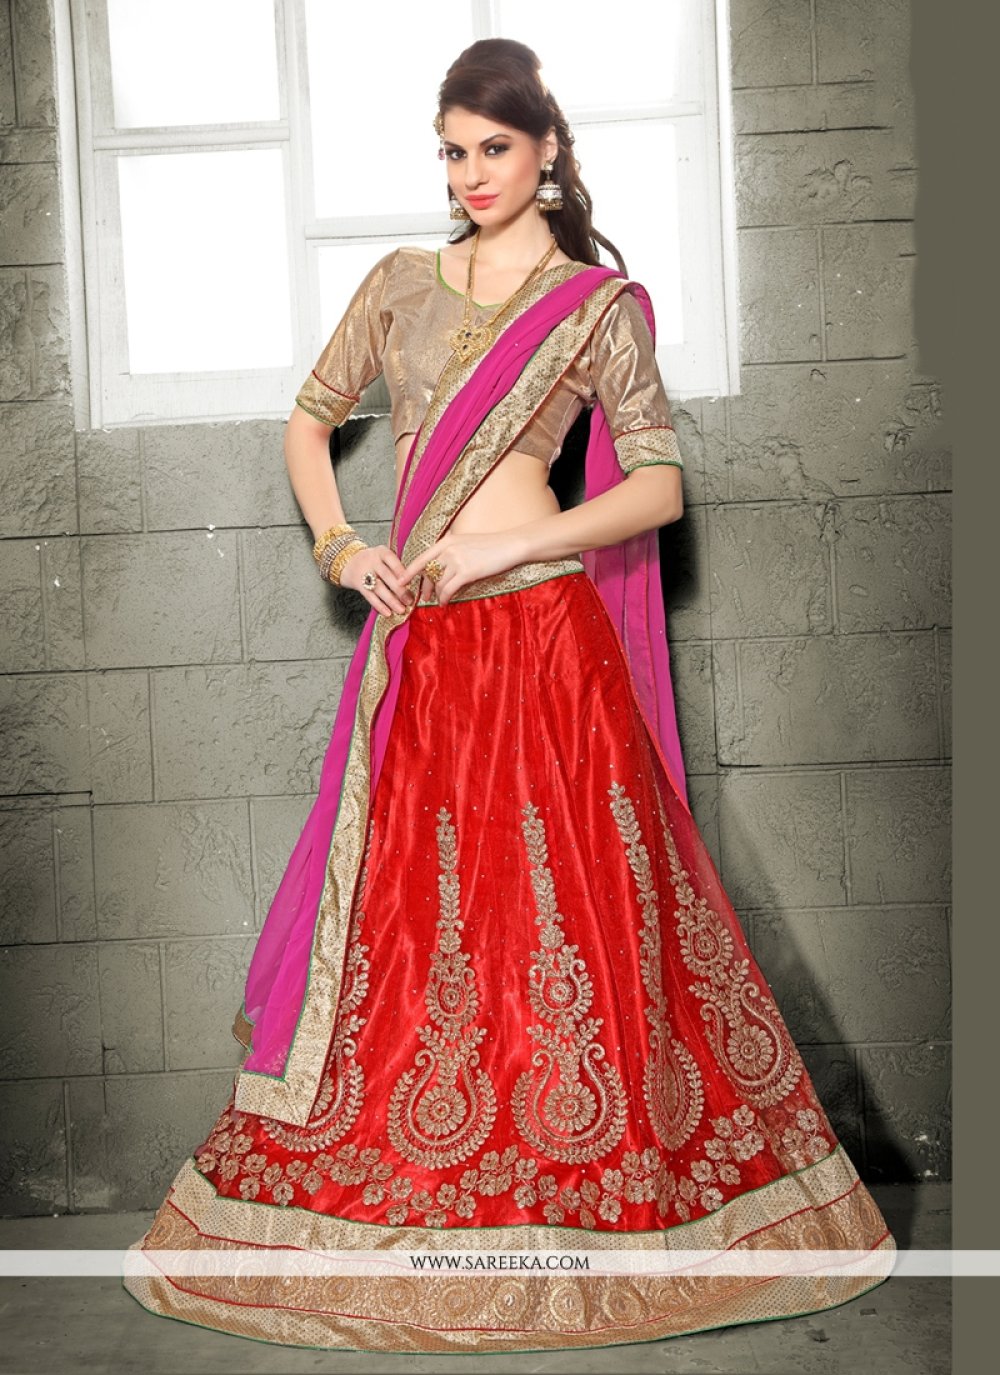 Indian Ethnic Wear Online: A Fashion Affair - Samyakk: Sarees | Sherwani |  Salwar Suits | Kurti | Lehenga | Gowns | Mens Wear